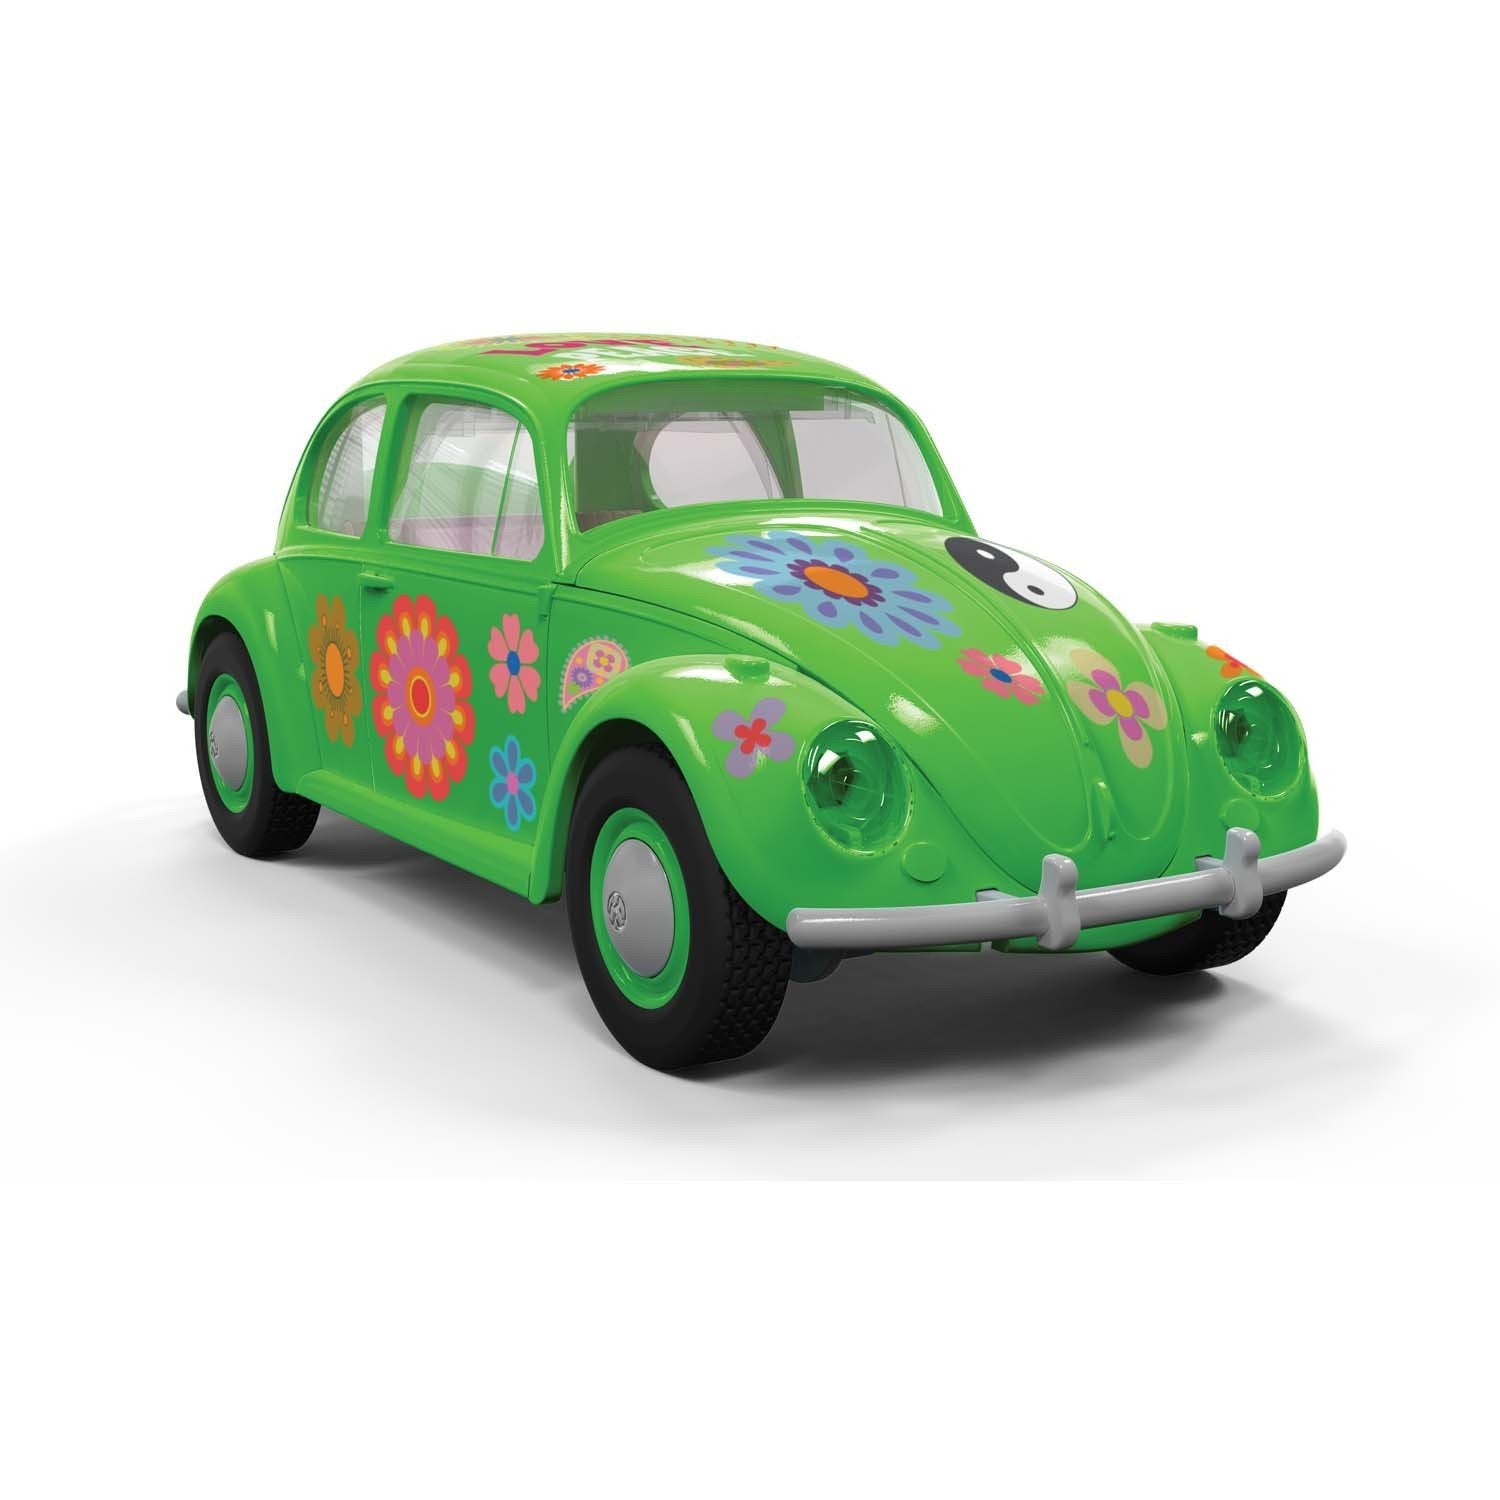 VW Beetle "Flower Power" 1/24 Quick Build Car Kit #J6031 by Airfix